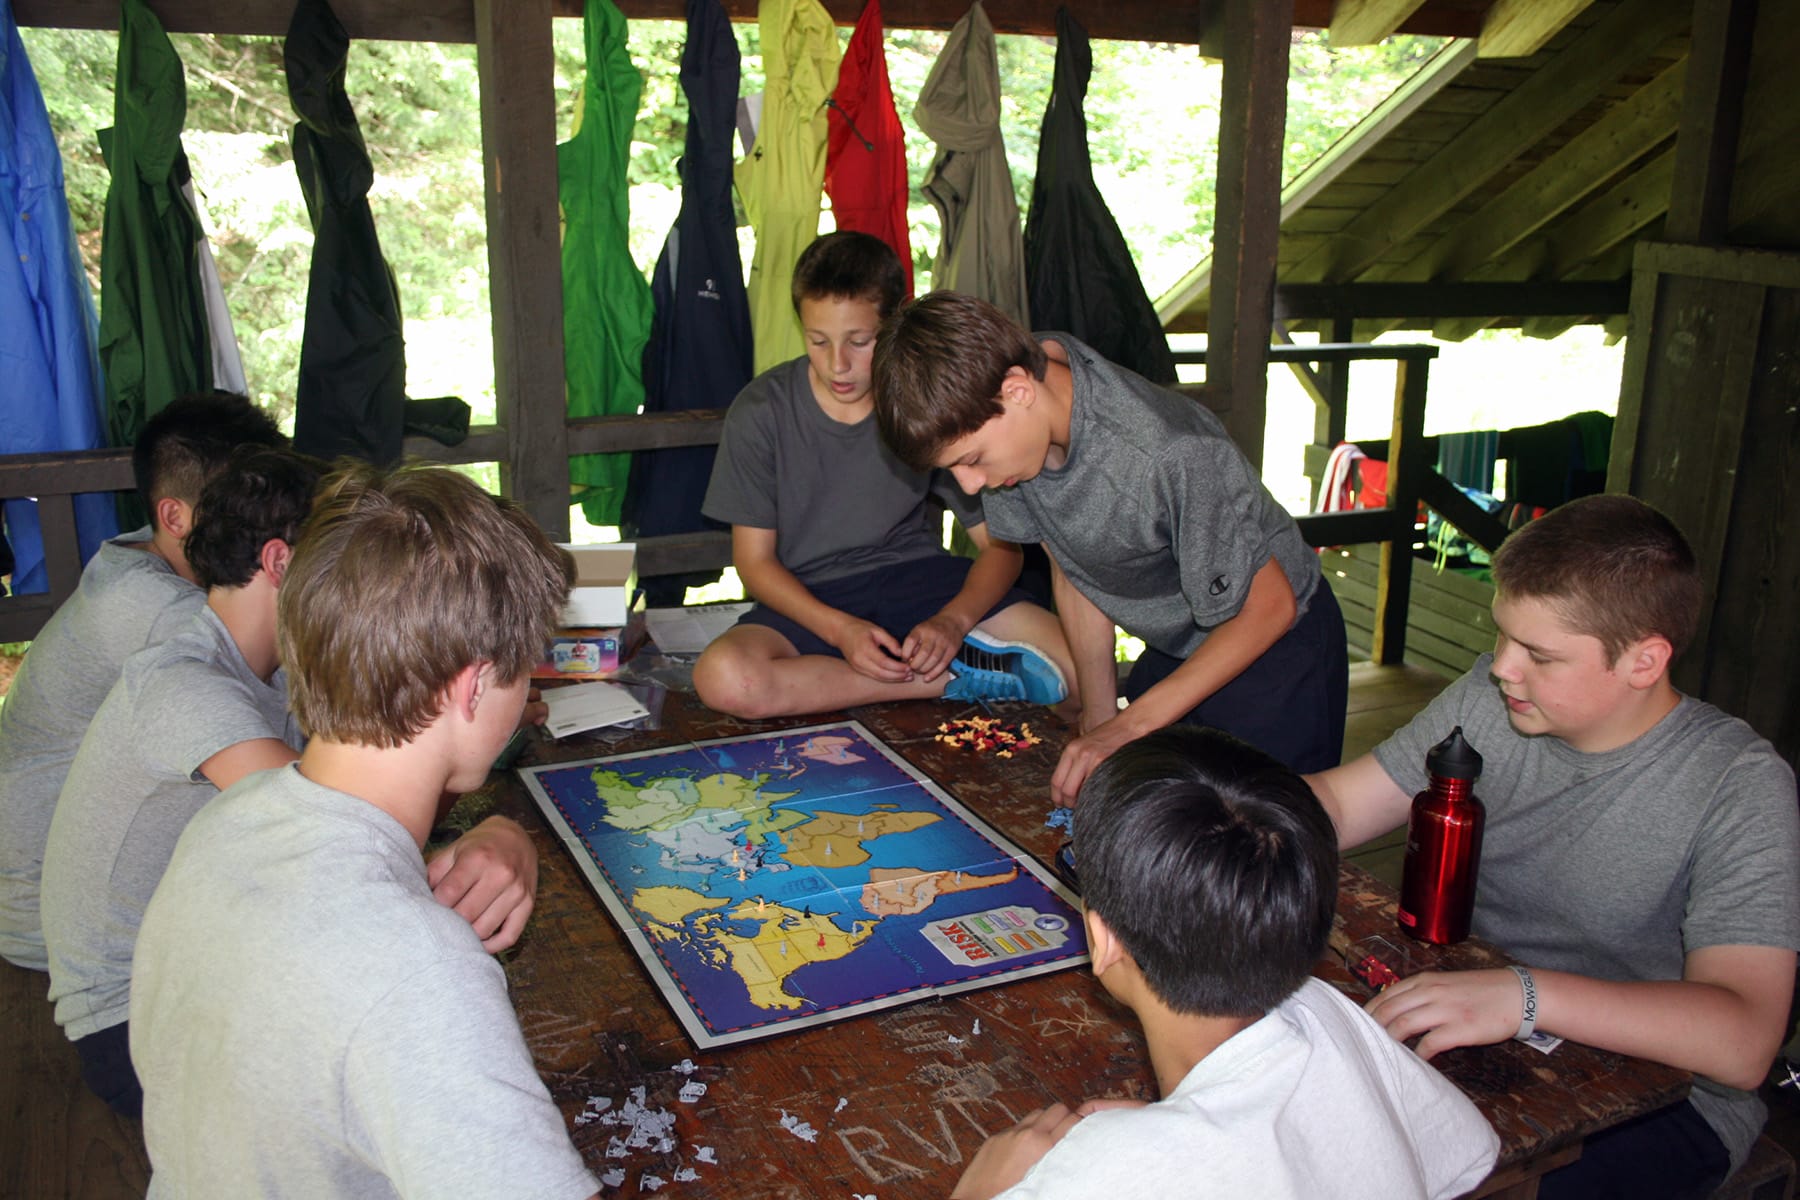 building teamwork and having fun at Camp Mowglis, NH